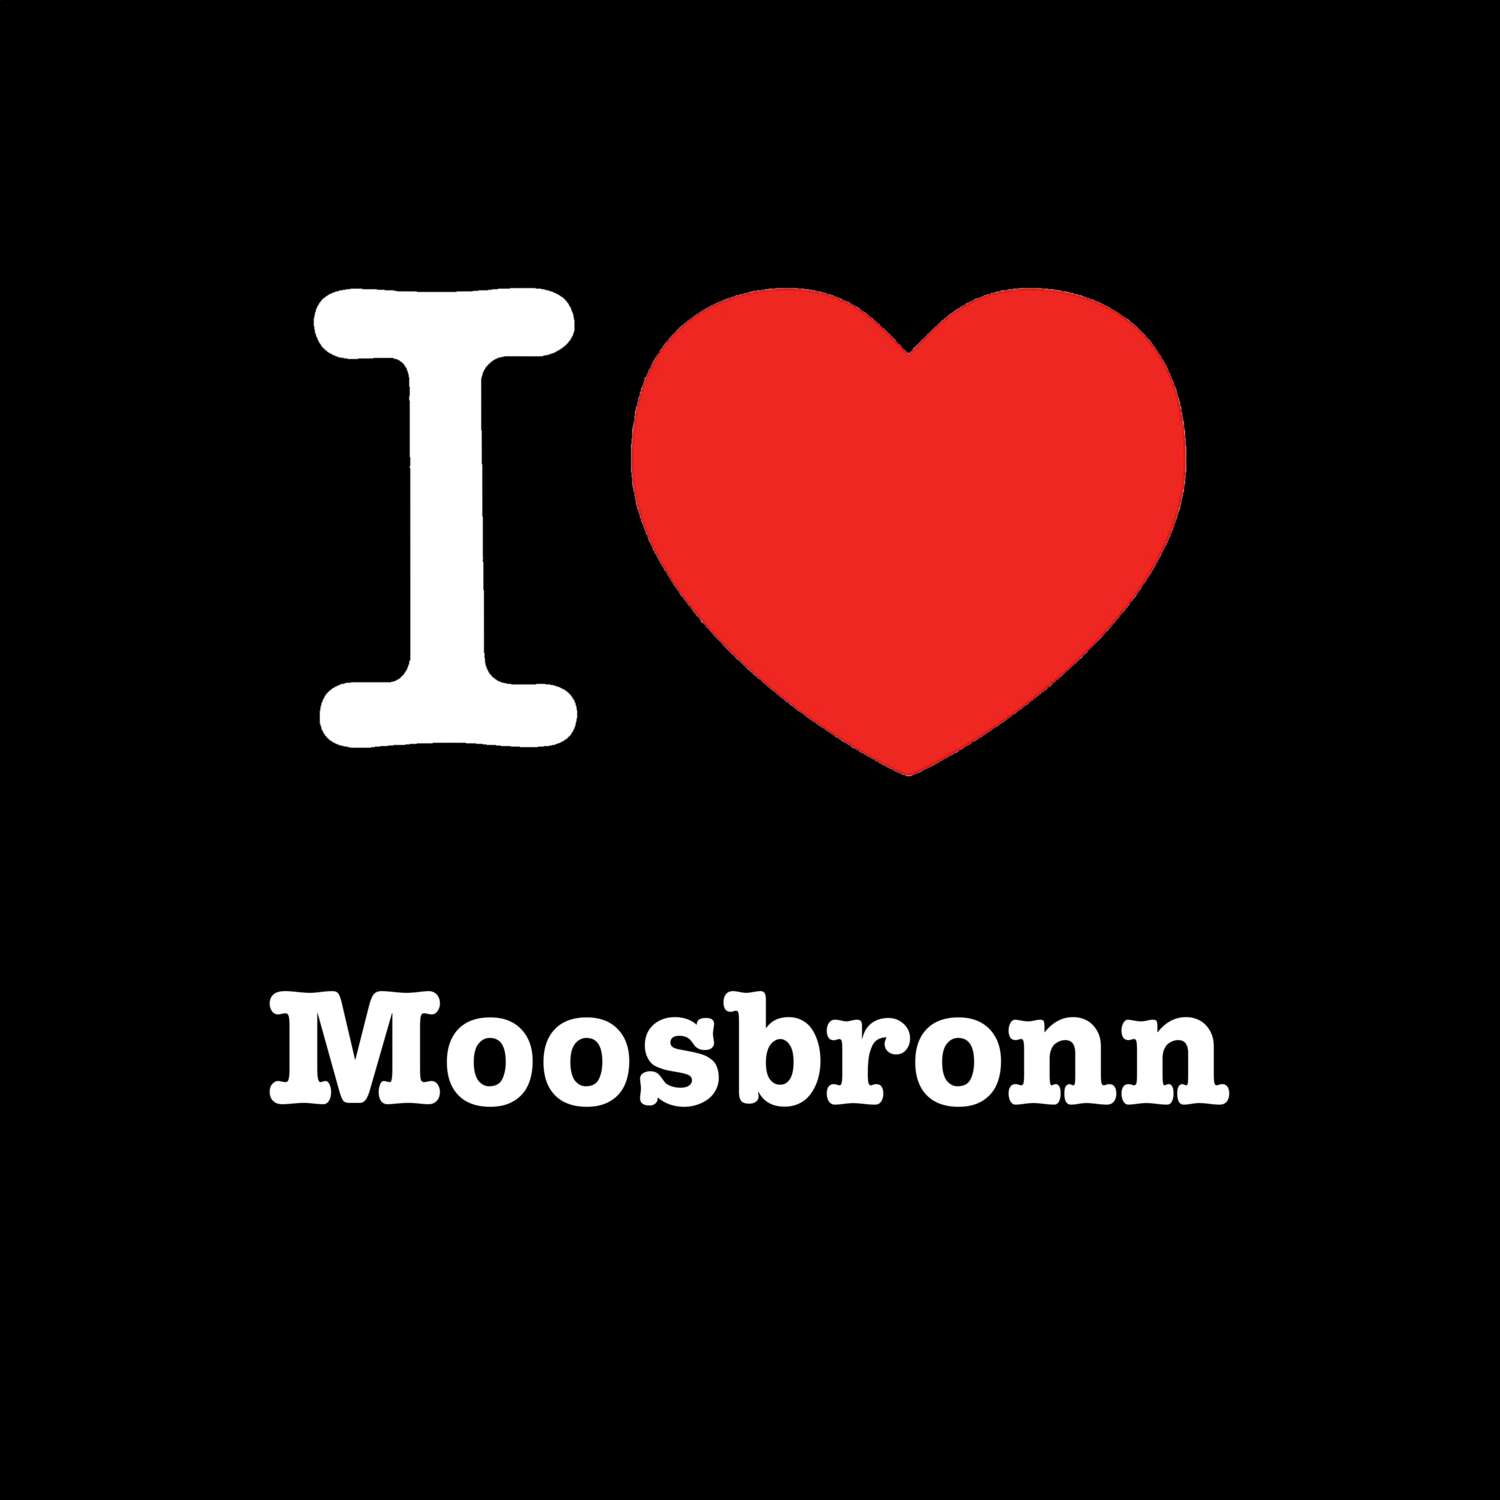 Moosbronn T-Shirt »I love«